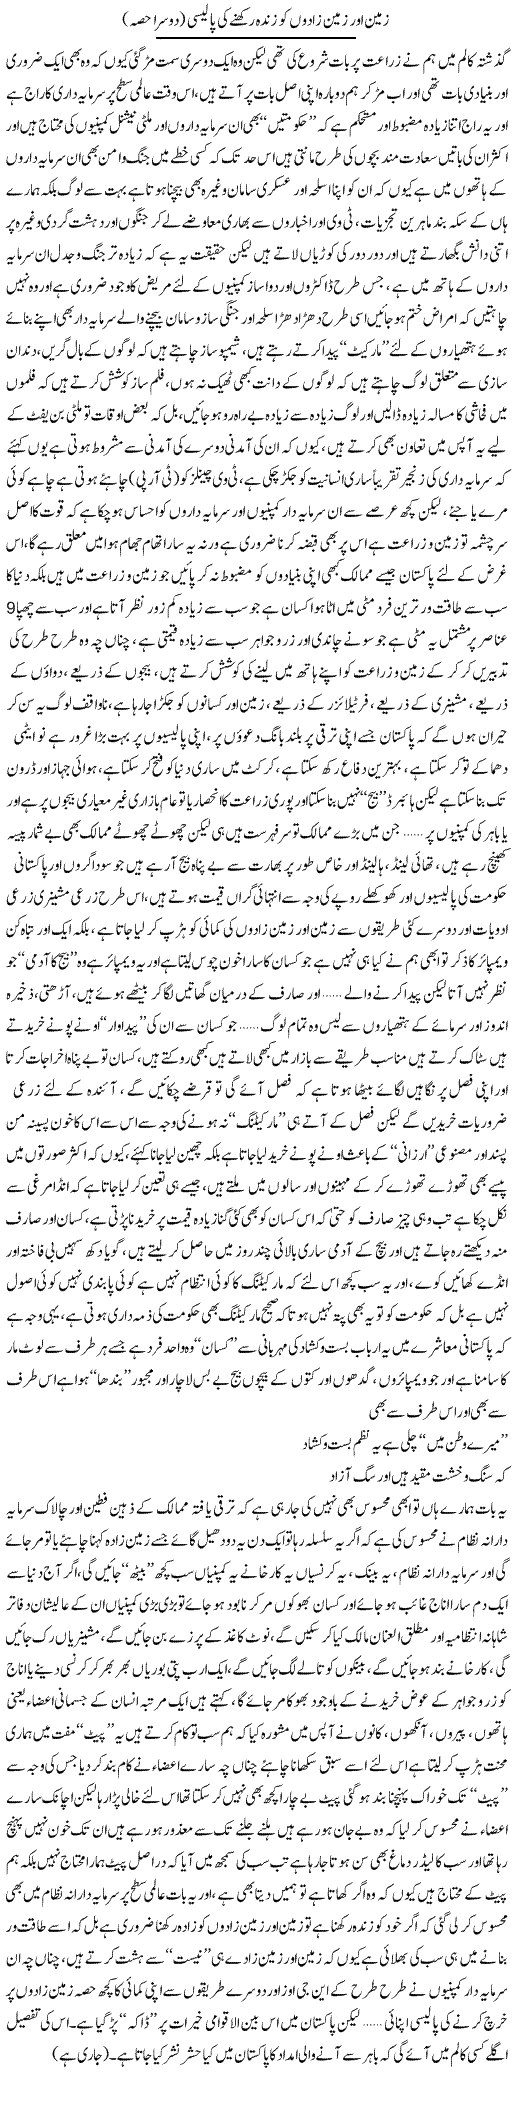 Zamin Our Zamin Zadon Ko Zinda Rakhne Ki Policy | Saad Ullah Jan Barq | Daily Urdu Columns